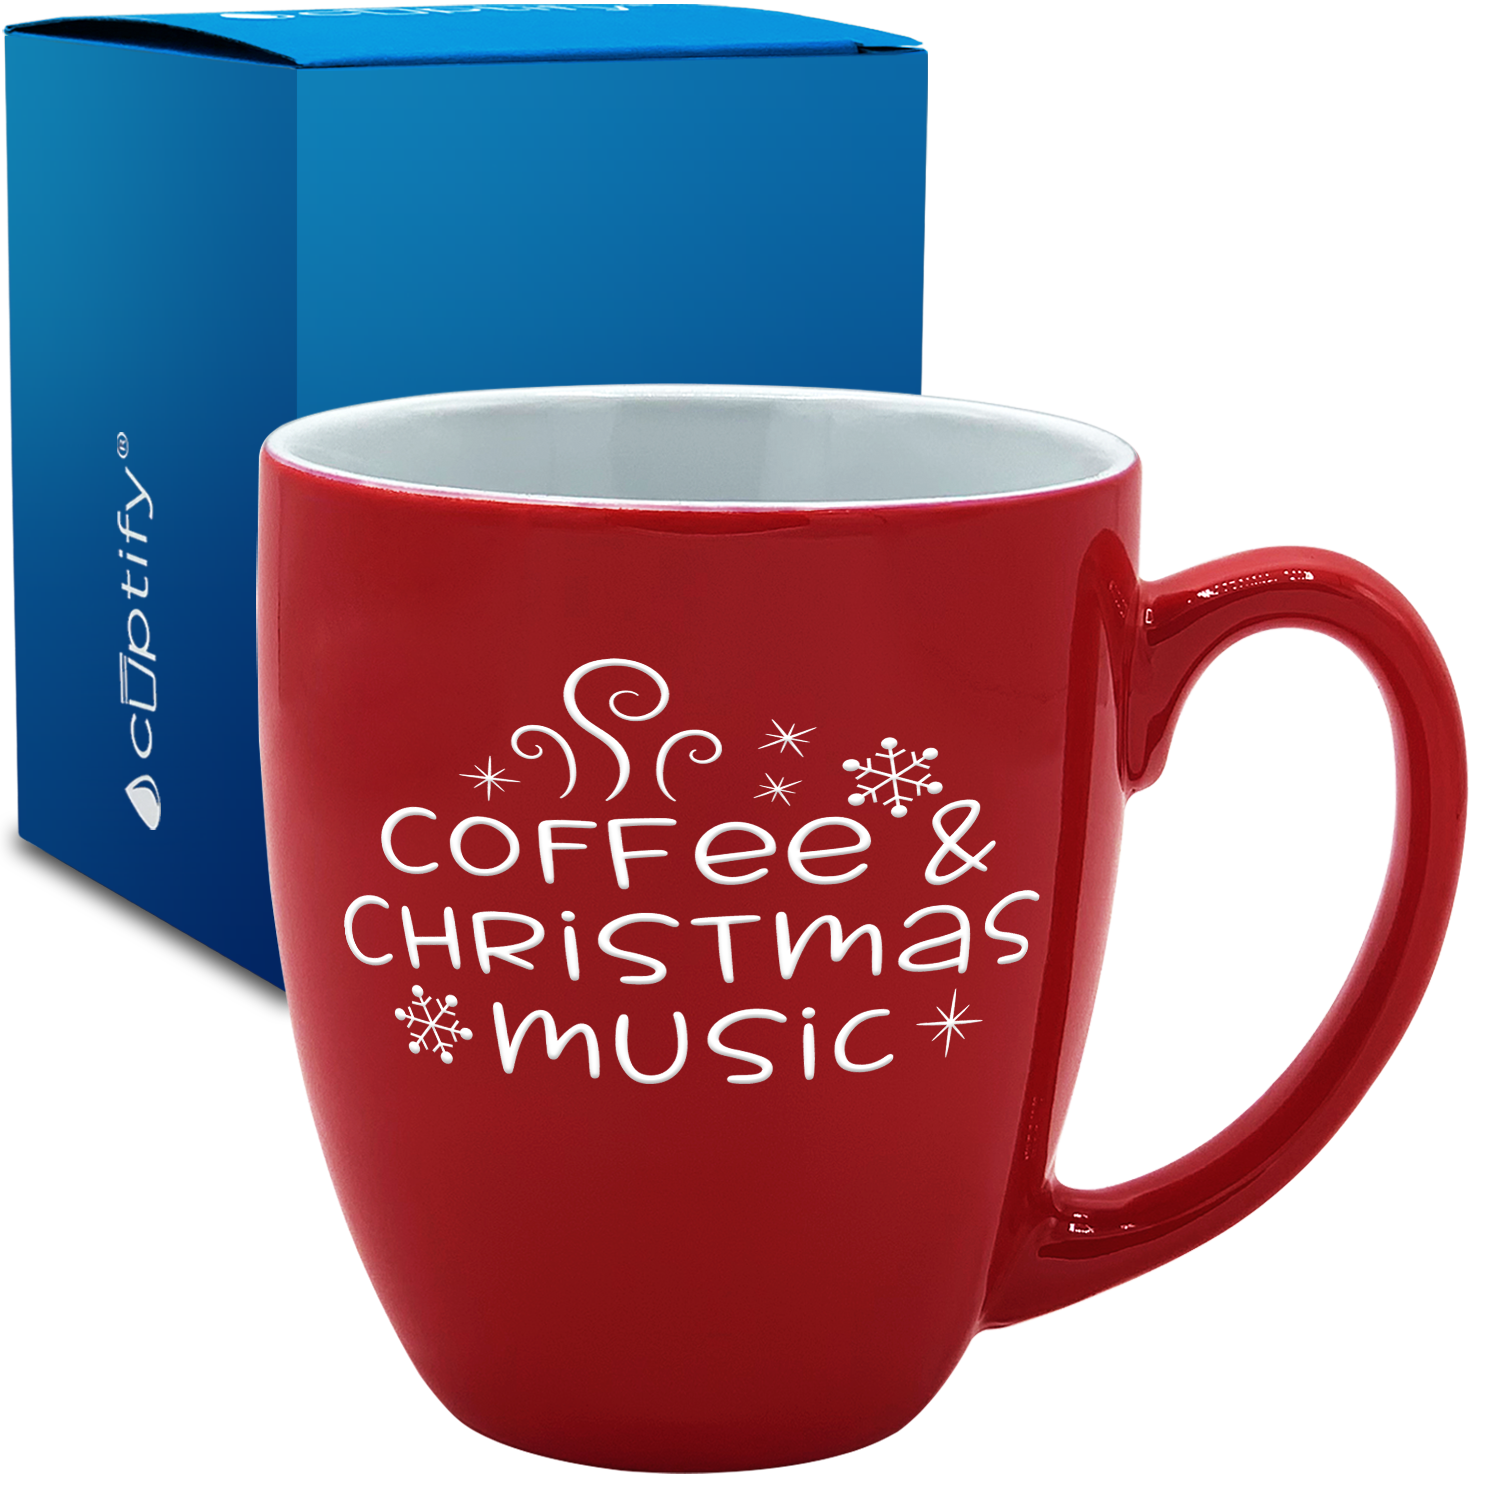 Coffee & Christmas Music 16oz Red Personalized Christmas Bistro Coffee Mug